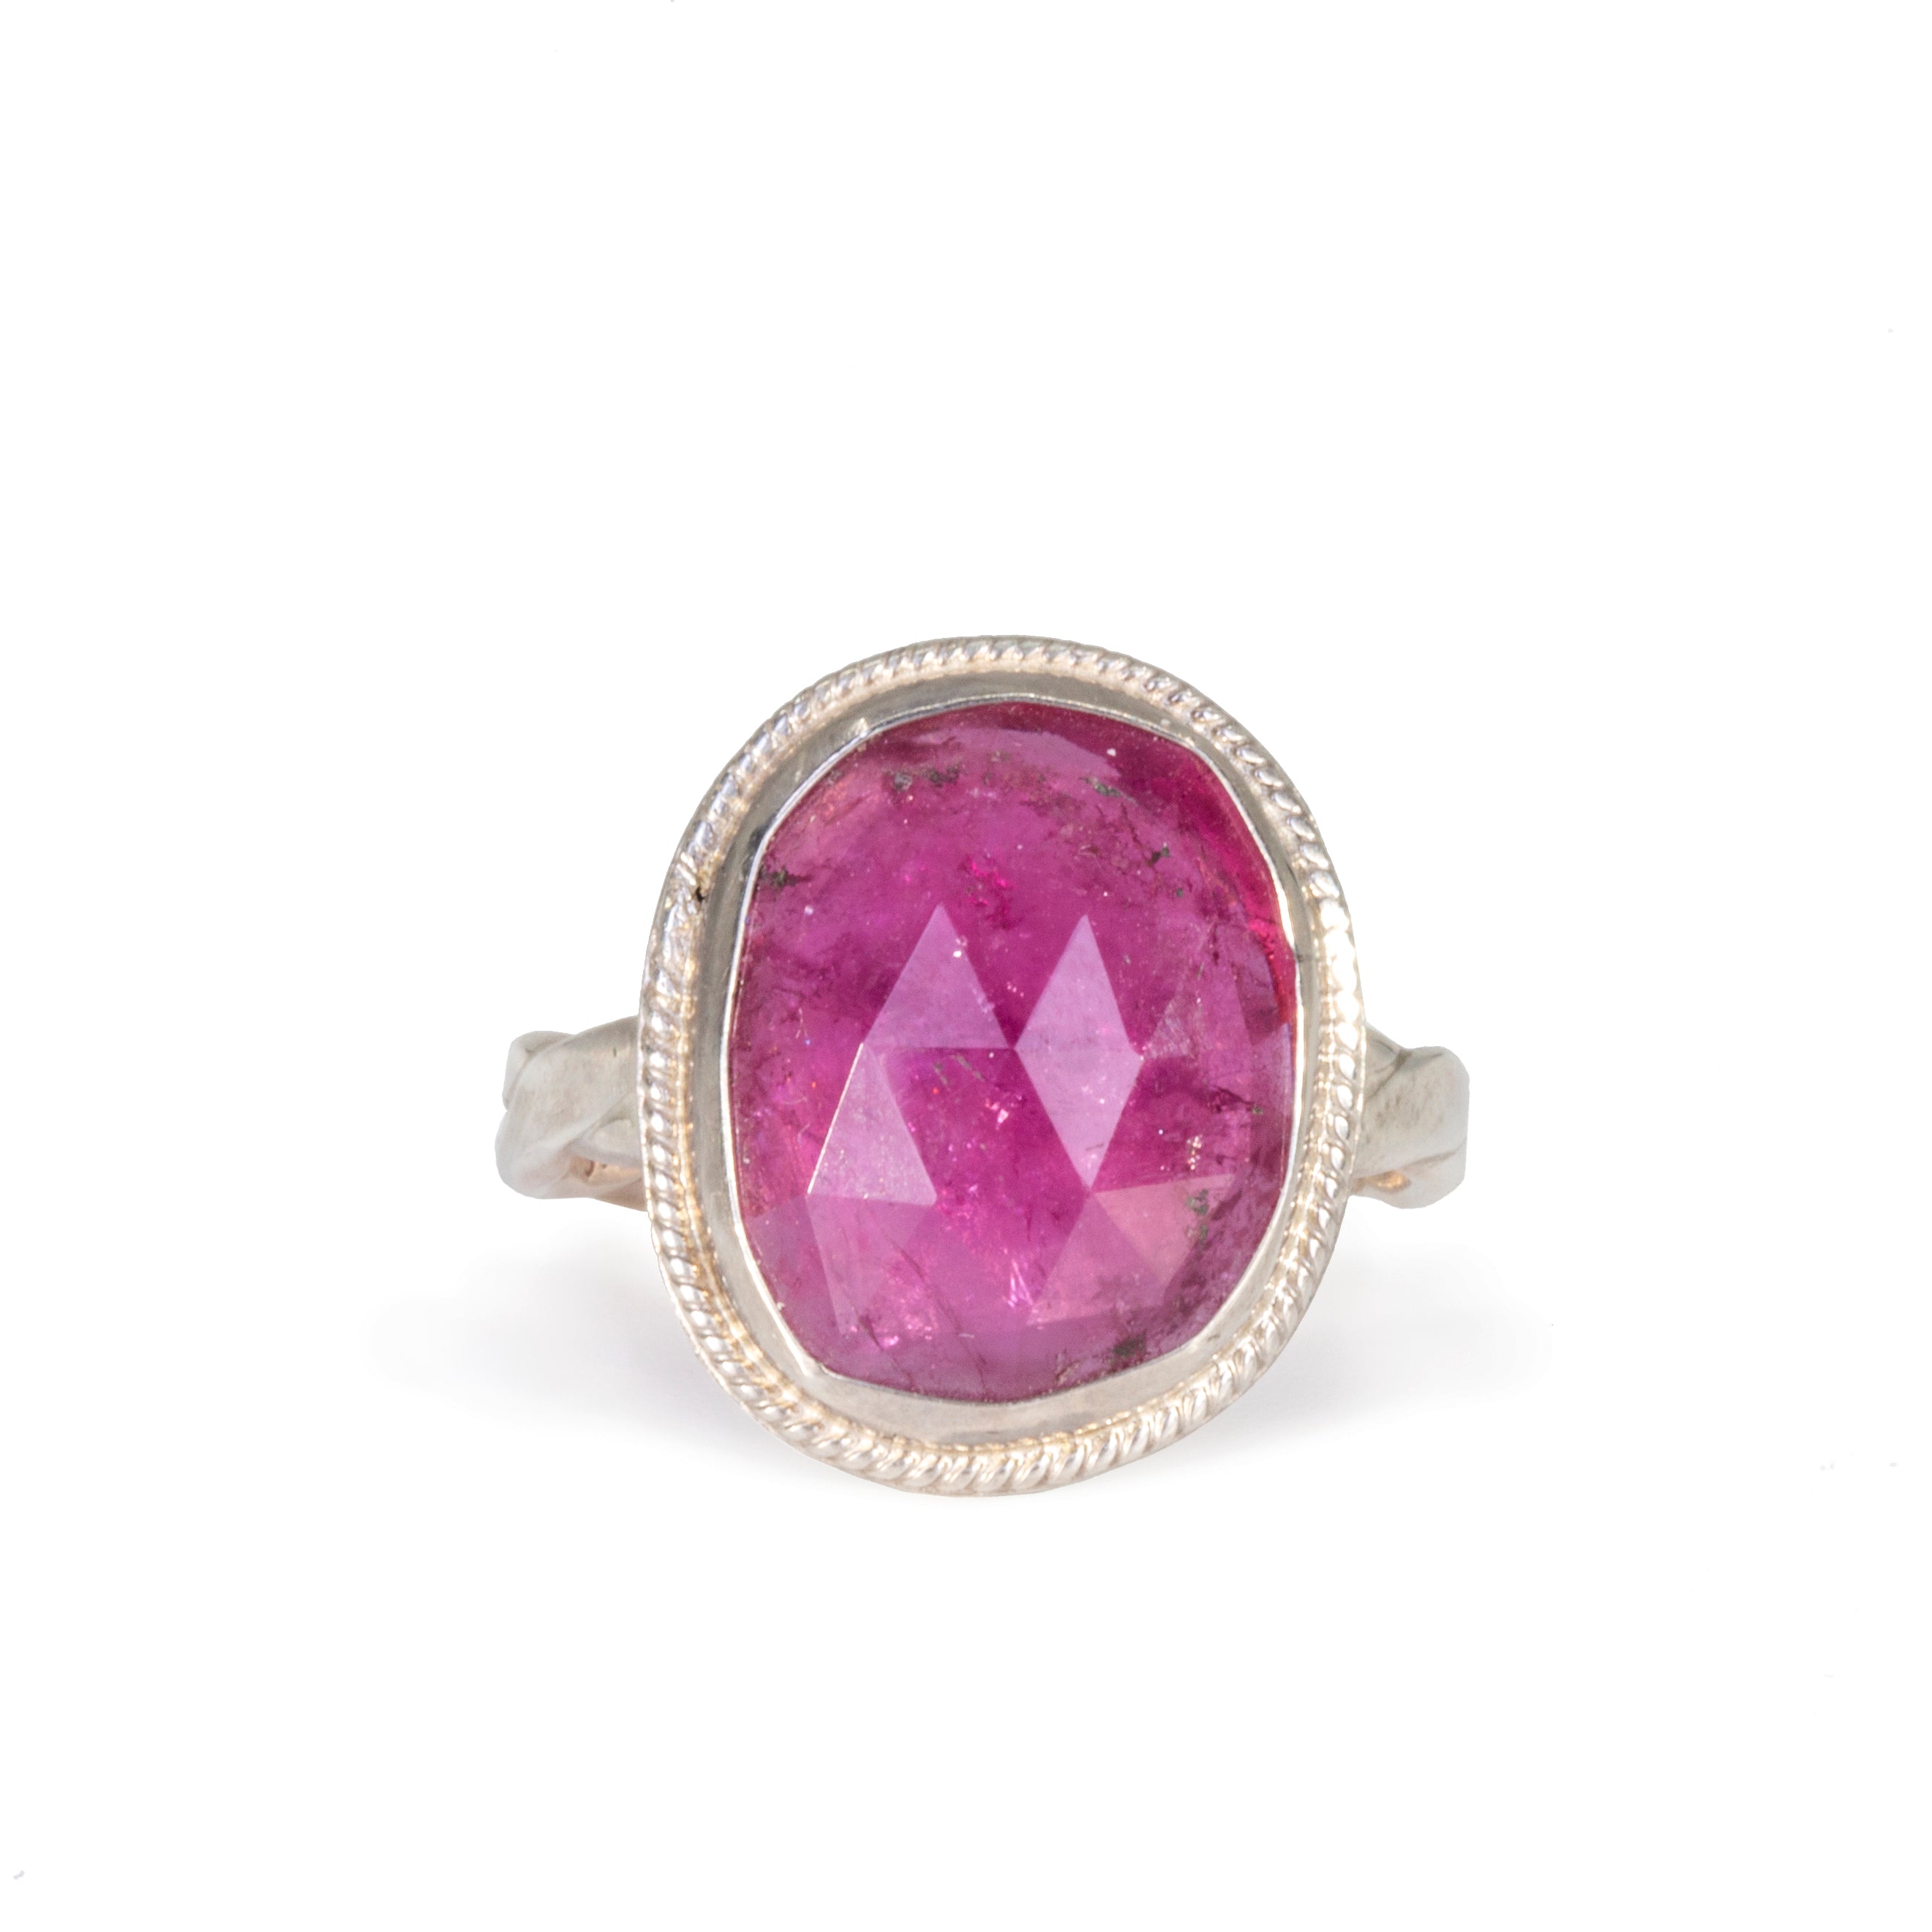 Pink Tourmaline 6.37 carat Rosecut Handcrafted Sterling Silver Ring - DDO-237 - Crystalarium